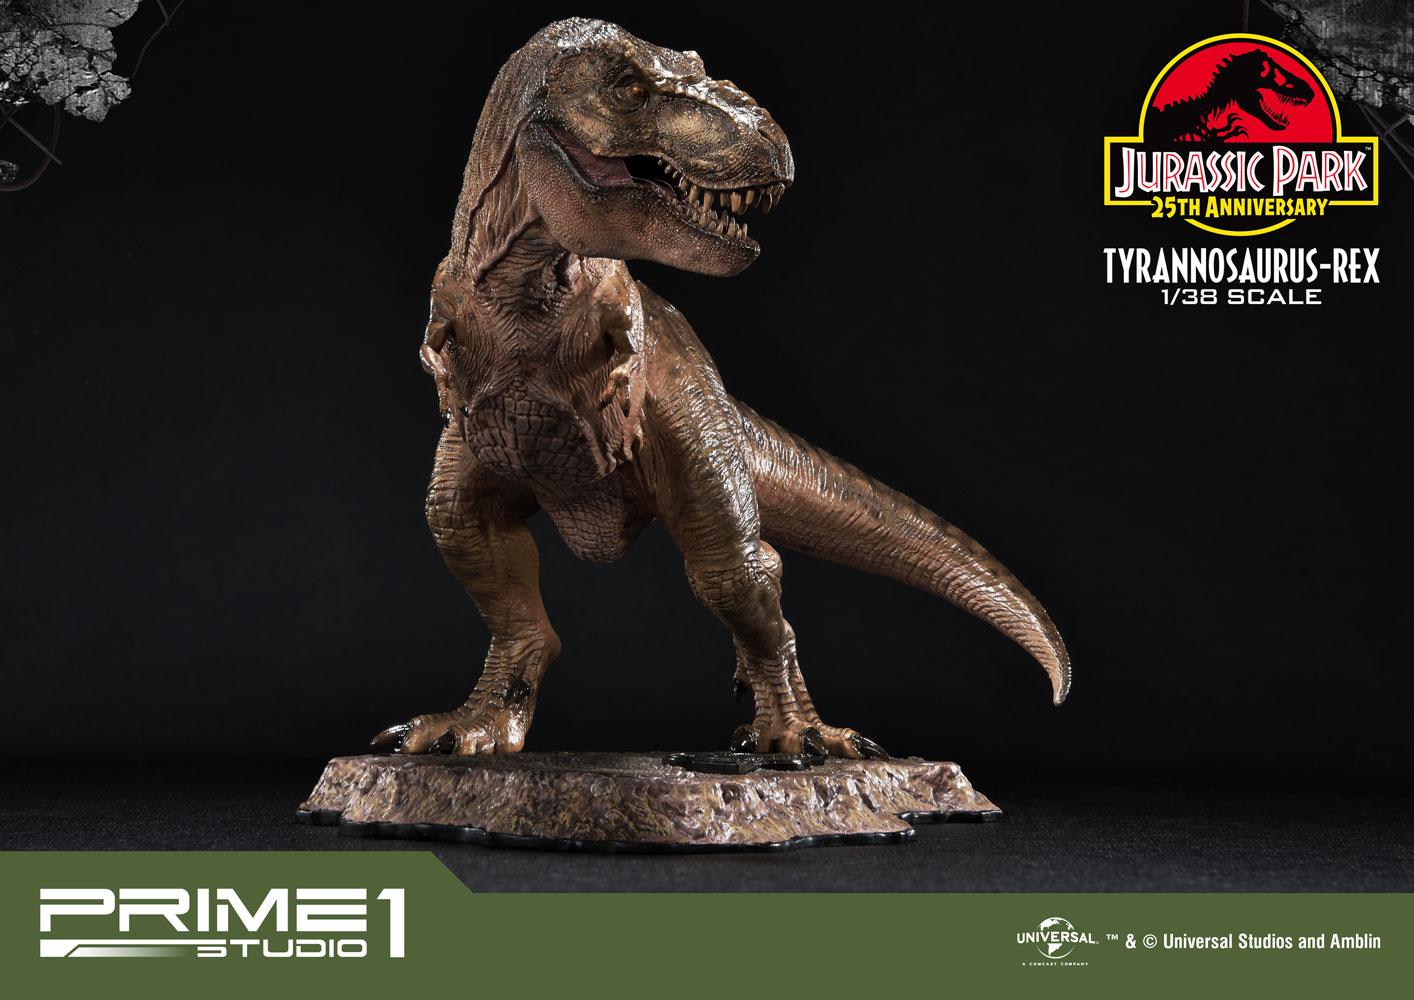 Jurassic Park Prime Collectibles PVC Statue 1/38 Tyrannosaurus-Rex